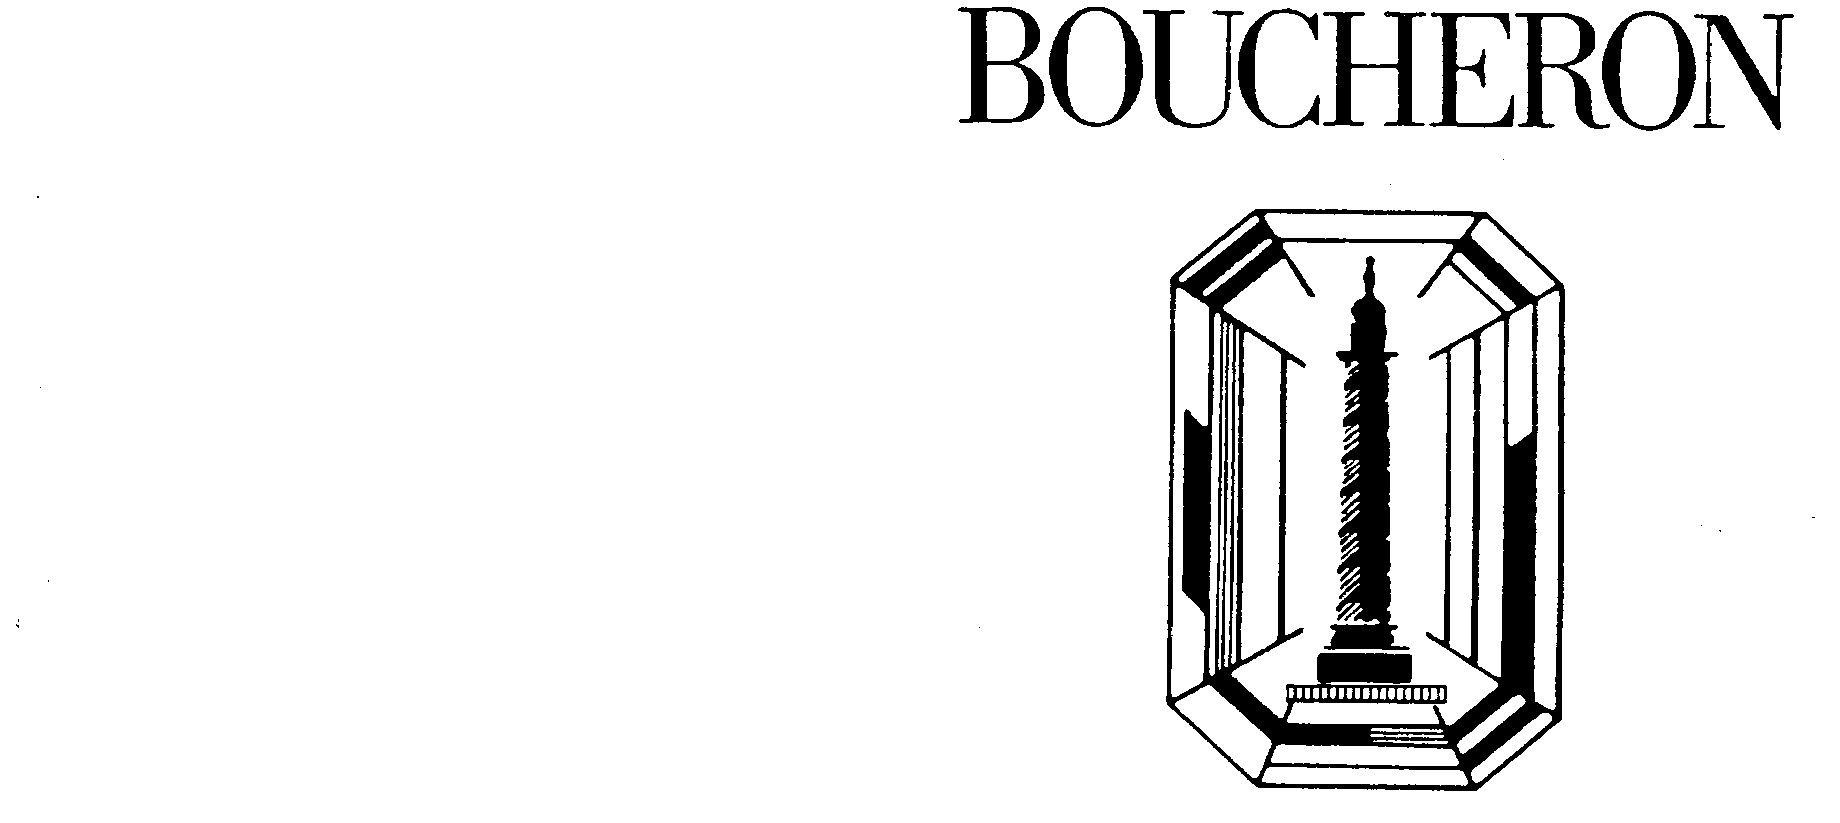 Boucheron Logo - BOUCHERON by Boucheron Holding - 378732